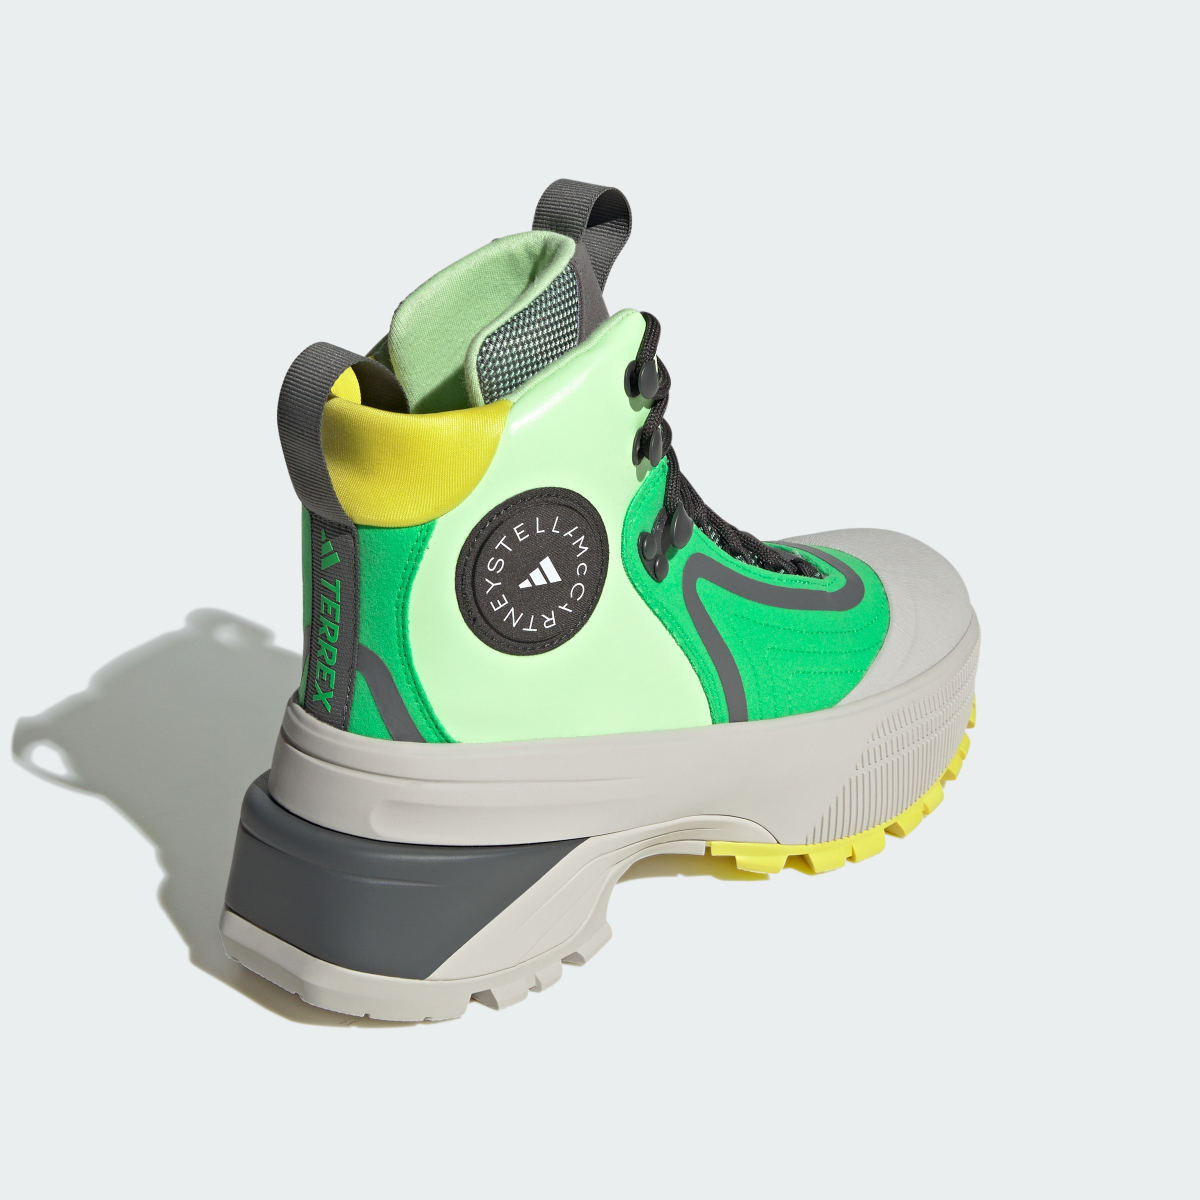 Adidas by Stella McCartney x Terrex Hiking Boots. 6